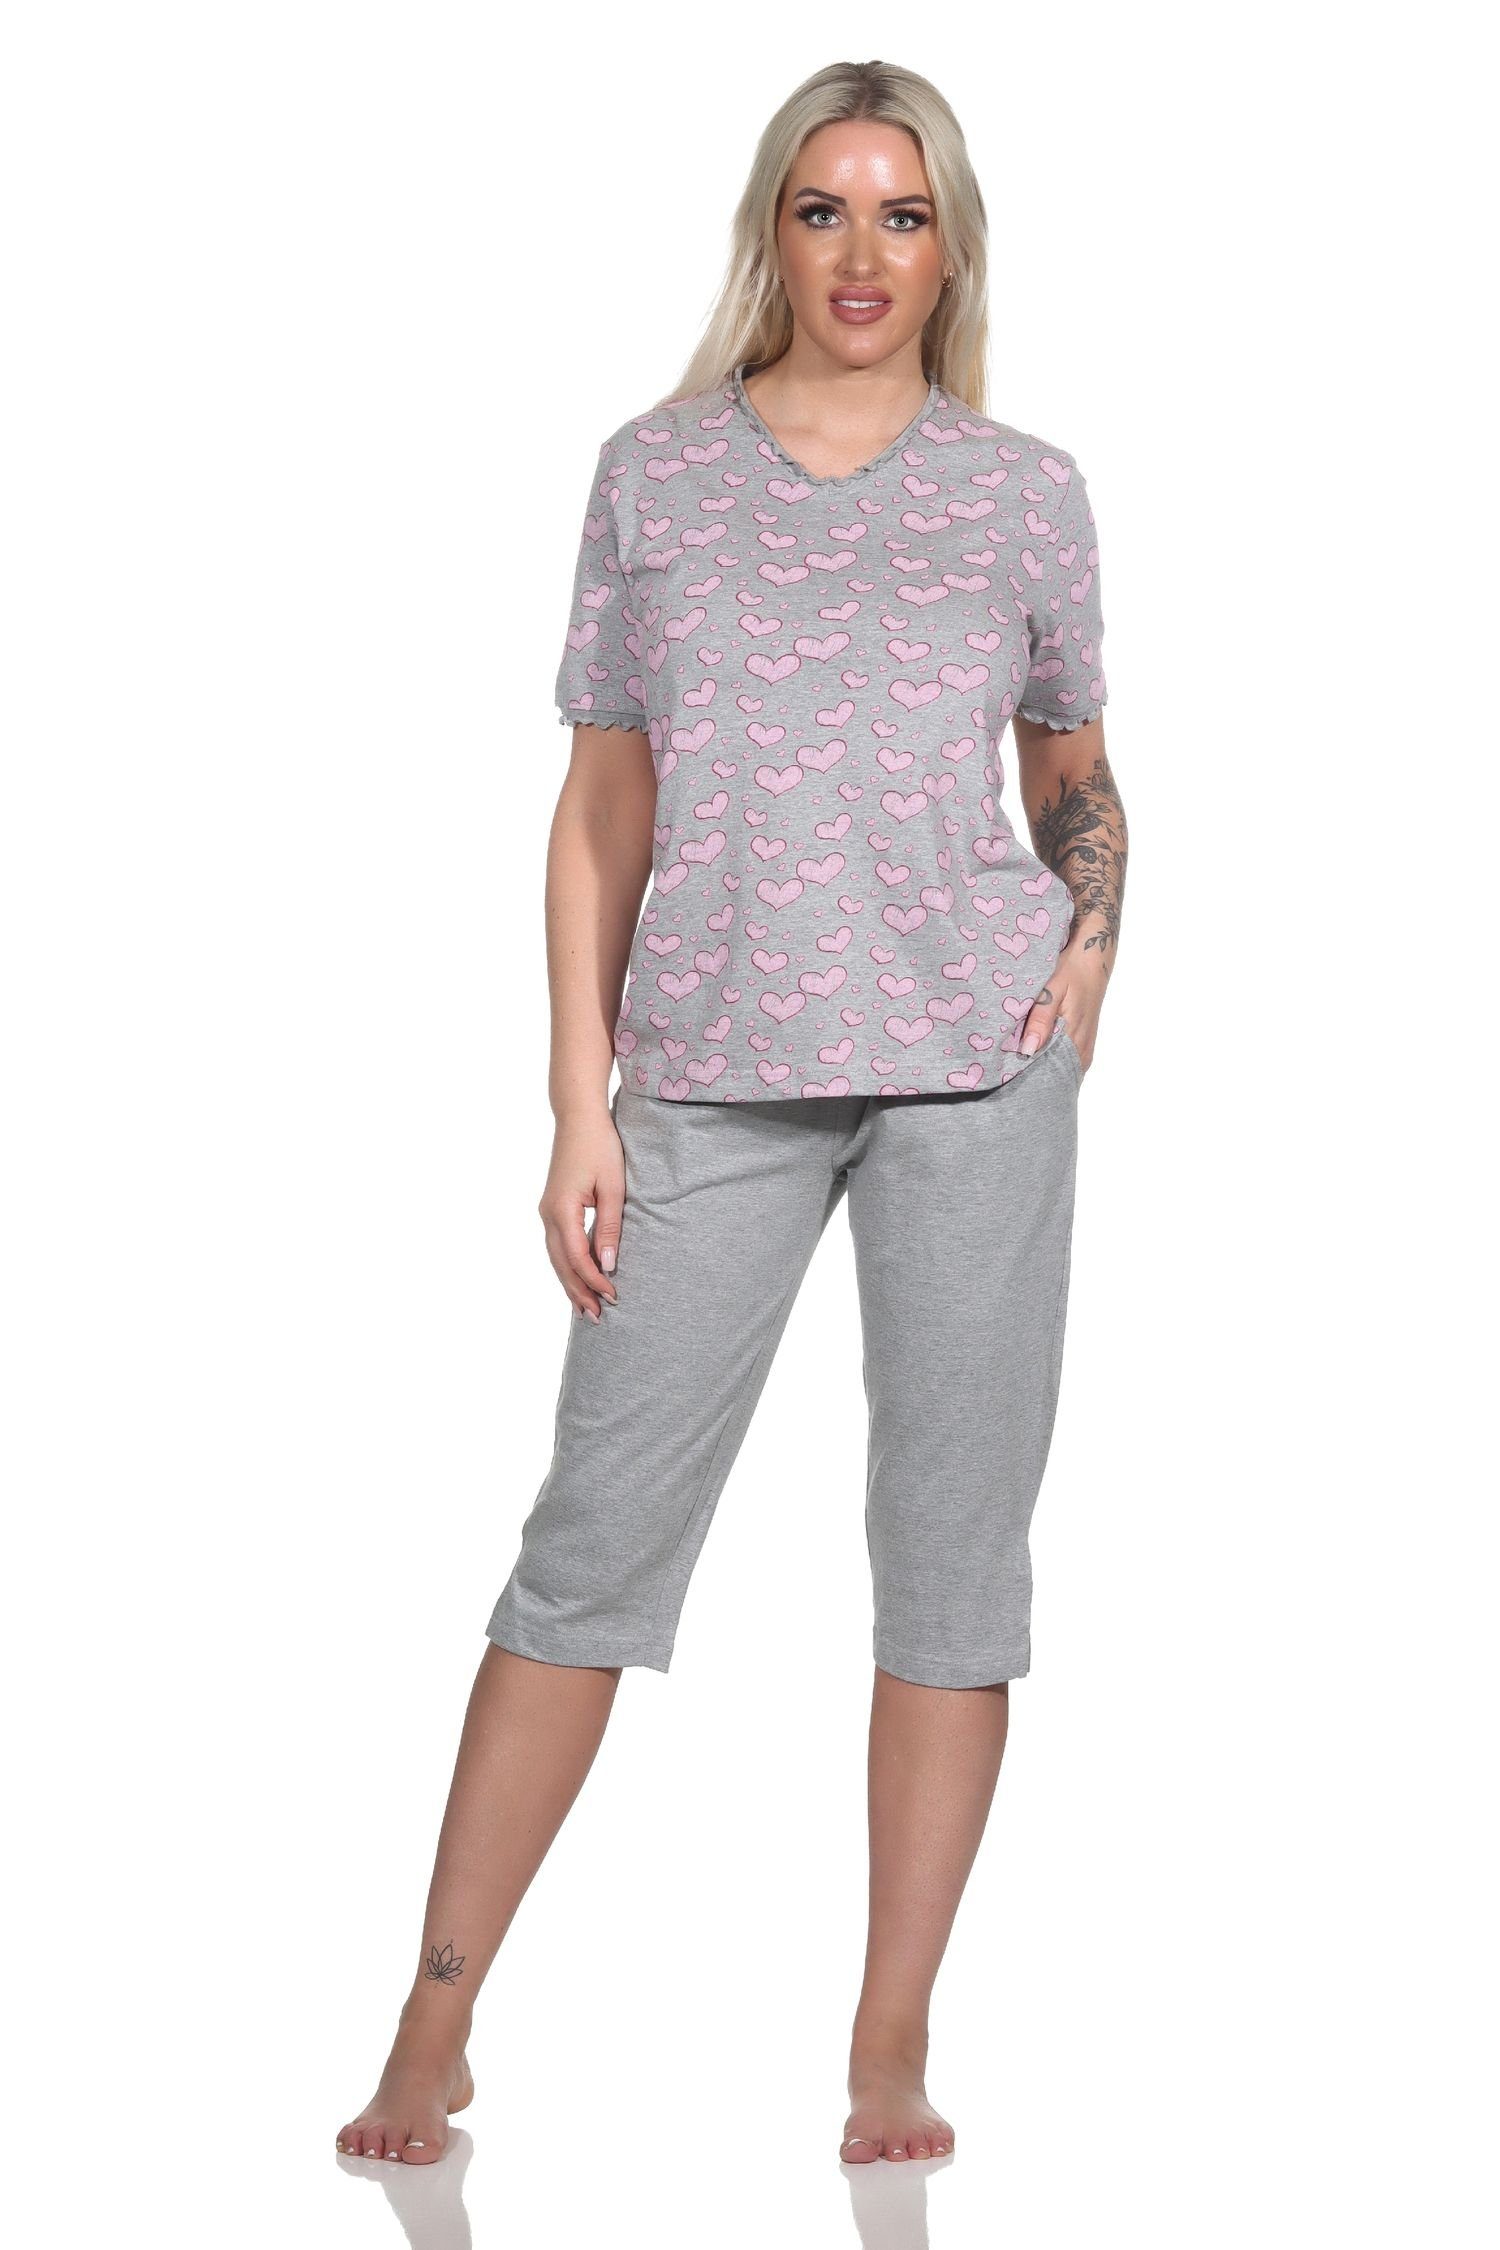 Kurzarm Normann Pyjama mit Motiv Herz Damen Optik grau-mel. Schlafanzug in Caprihose